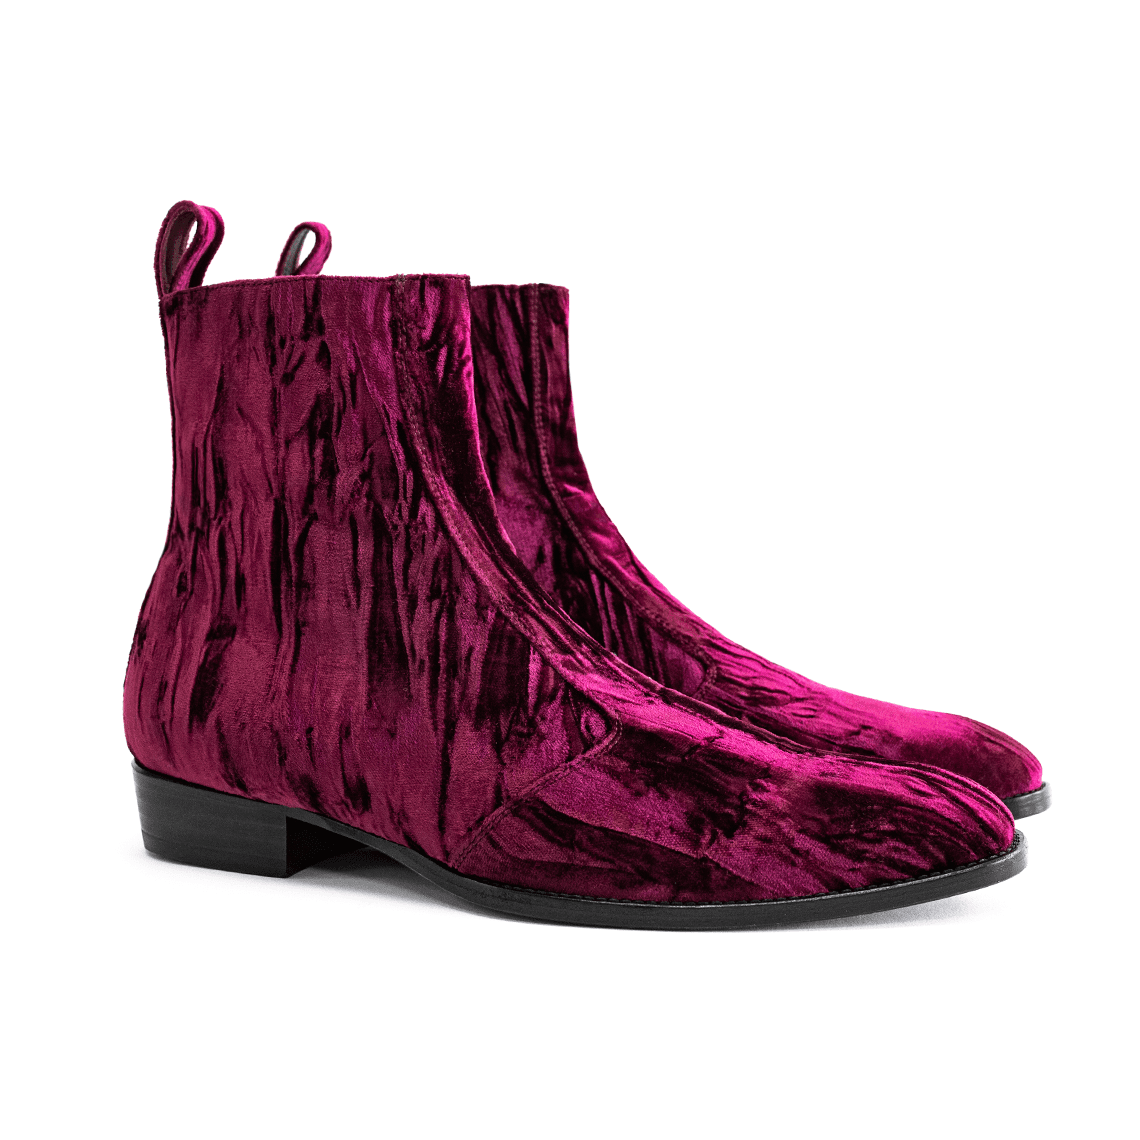 the reggio velvet chelsea boots